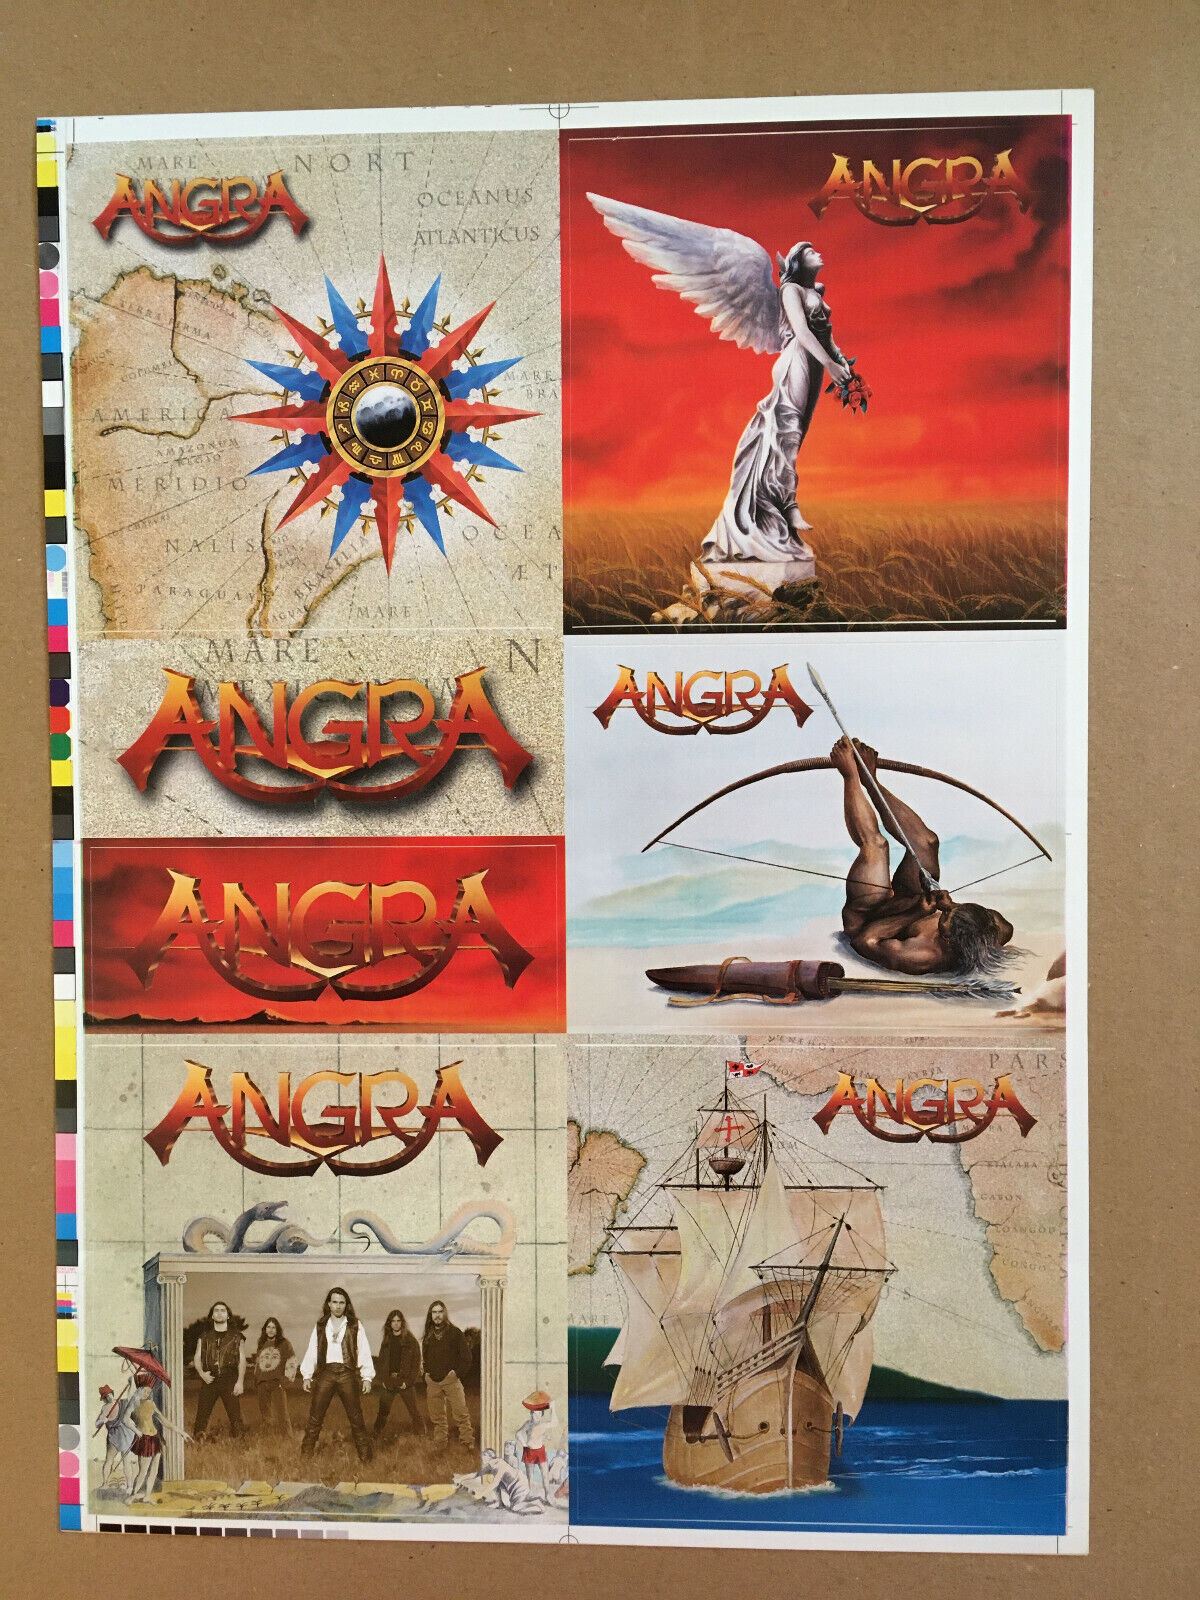 ANGRA - A4 Sticker-Sheet with 7 stickers / A4 Aufkleber-Bogen mit 7 Aufklebern